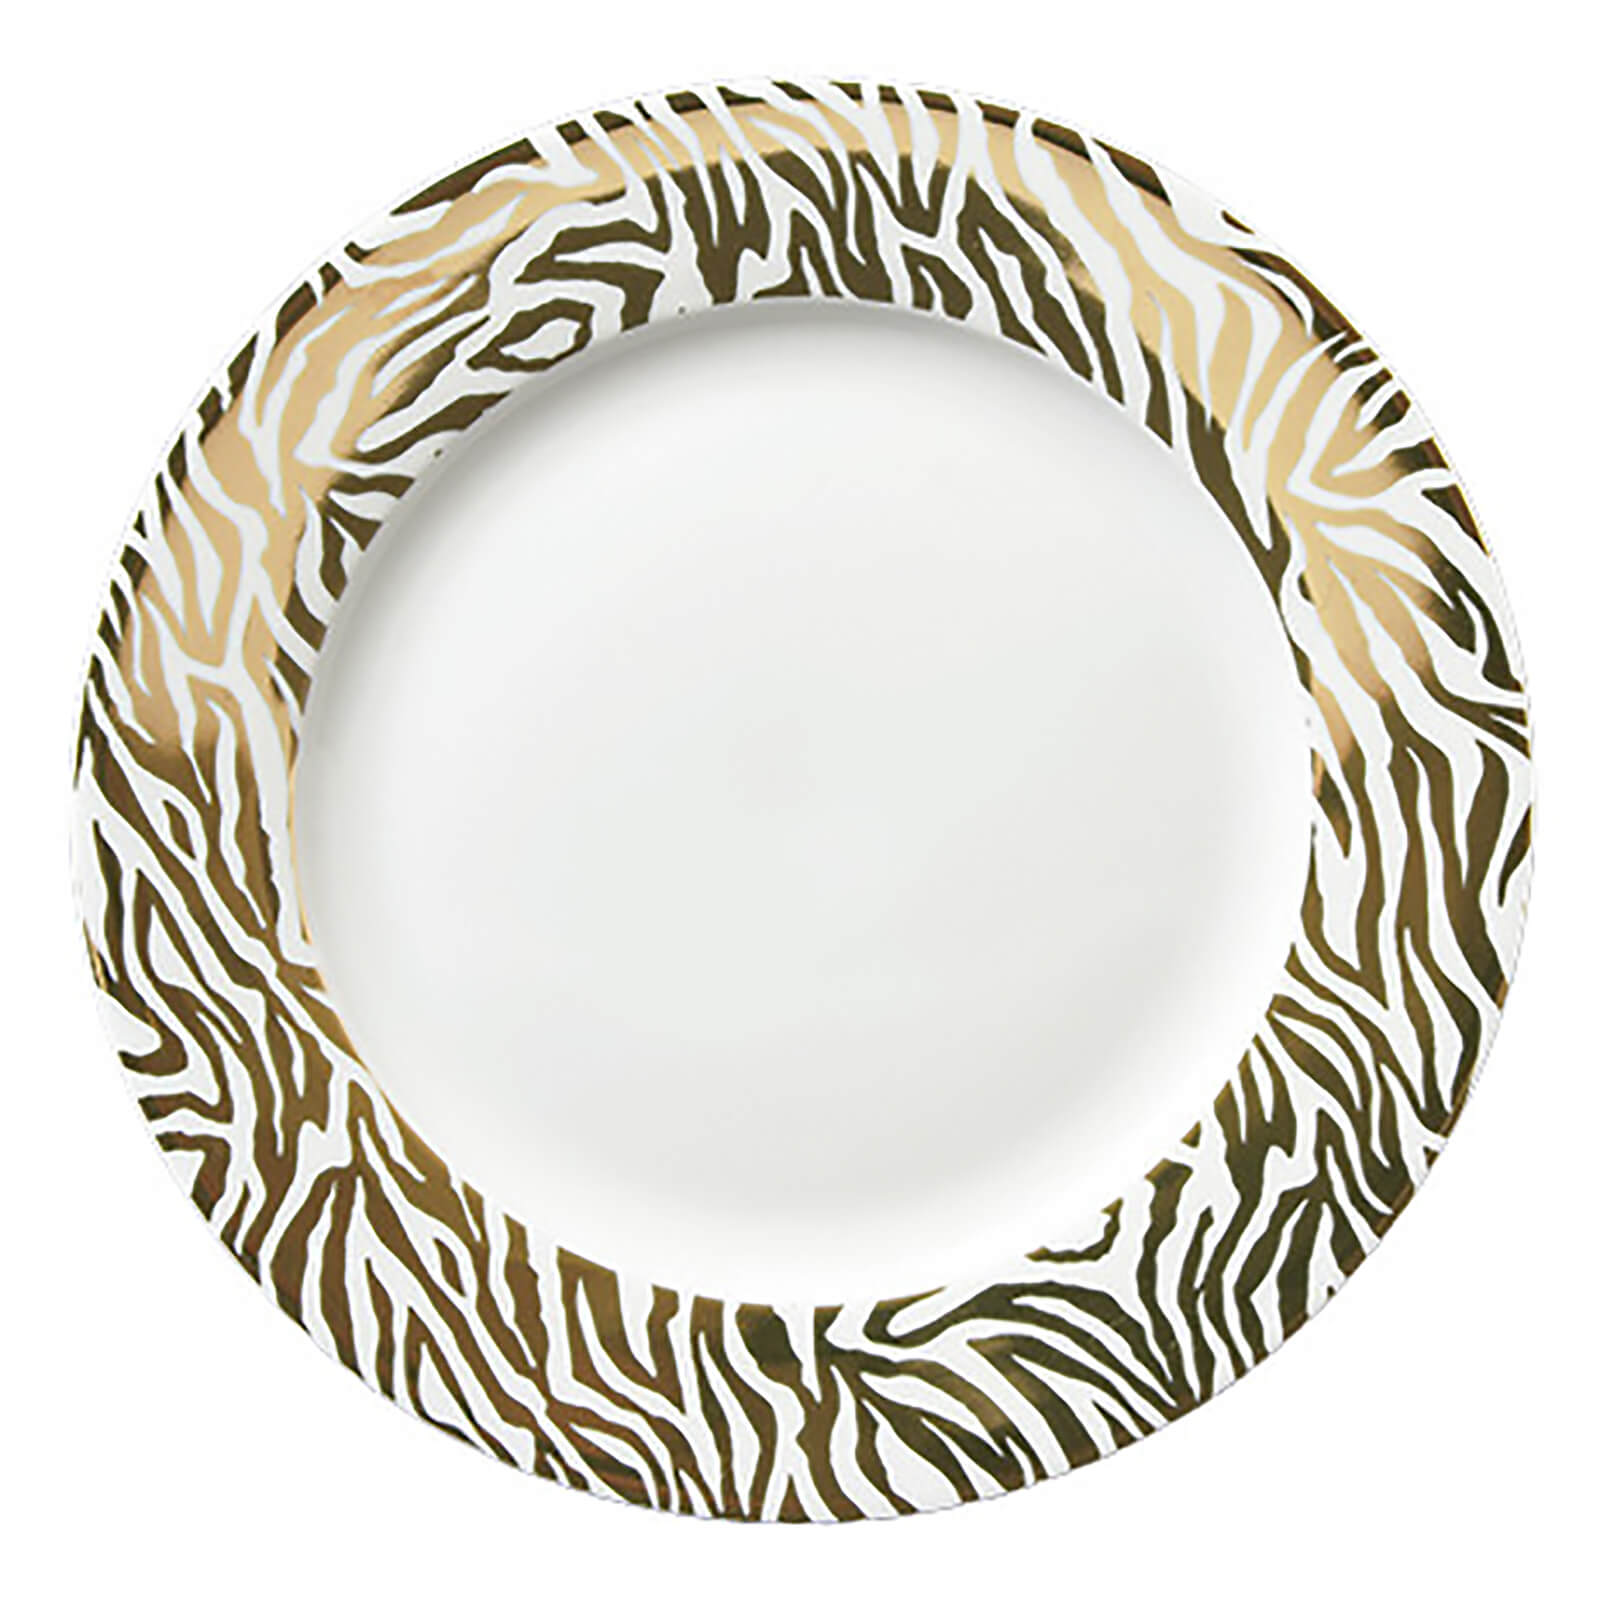 Zebra Print Porcelain Dinner Plate with Gold Rim